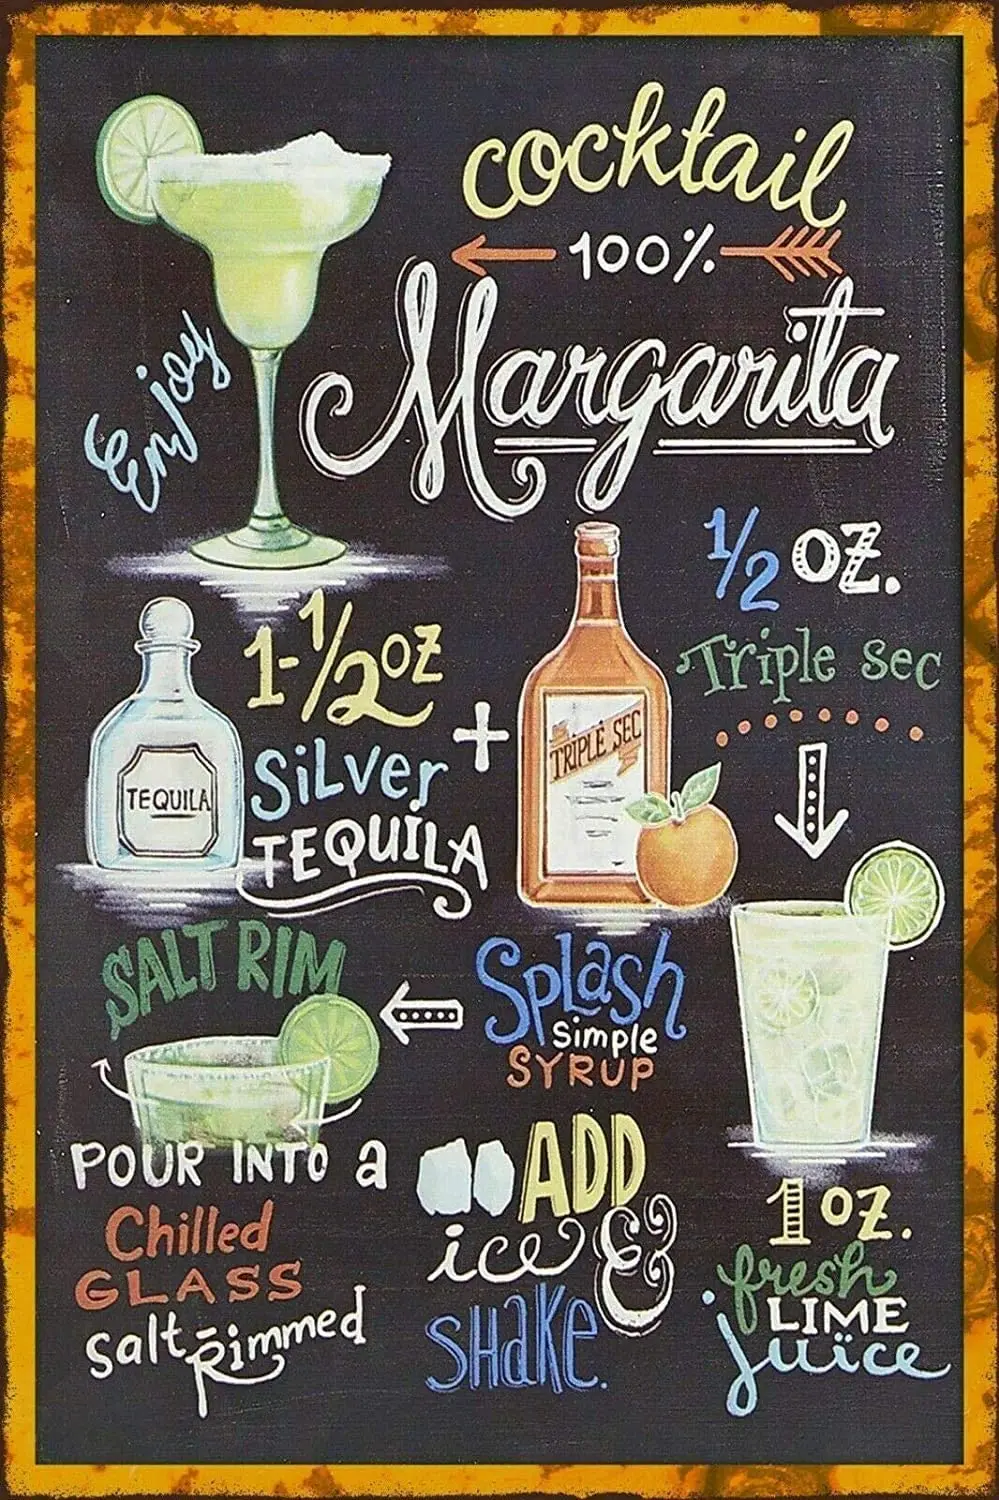 

New Metal Poster Margarita Cocktail Recipe Vintage Metal Tin Sign 8x12 Inch Retro Art Home Bar Pub Garage Shop Wall Decor